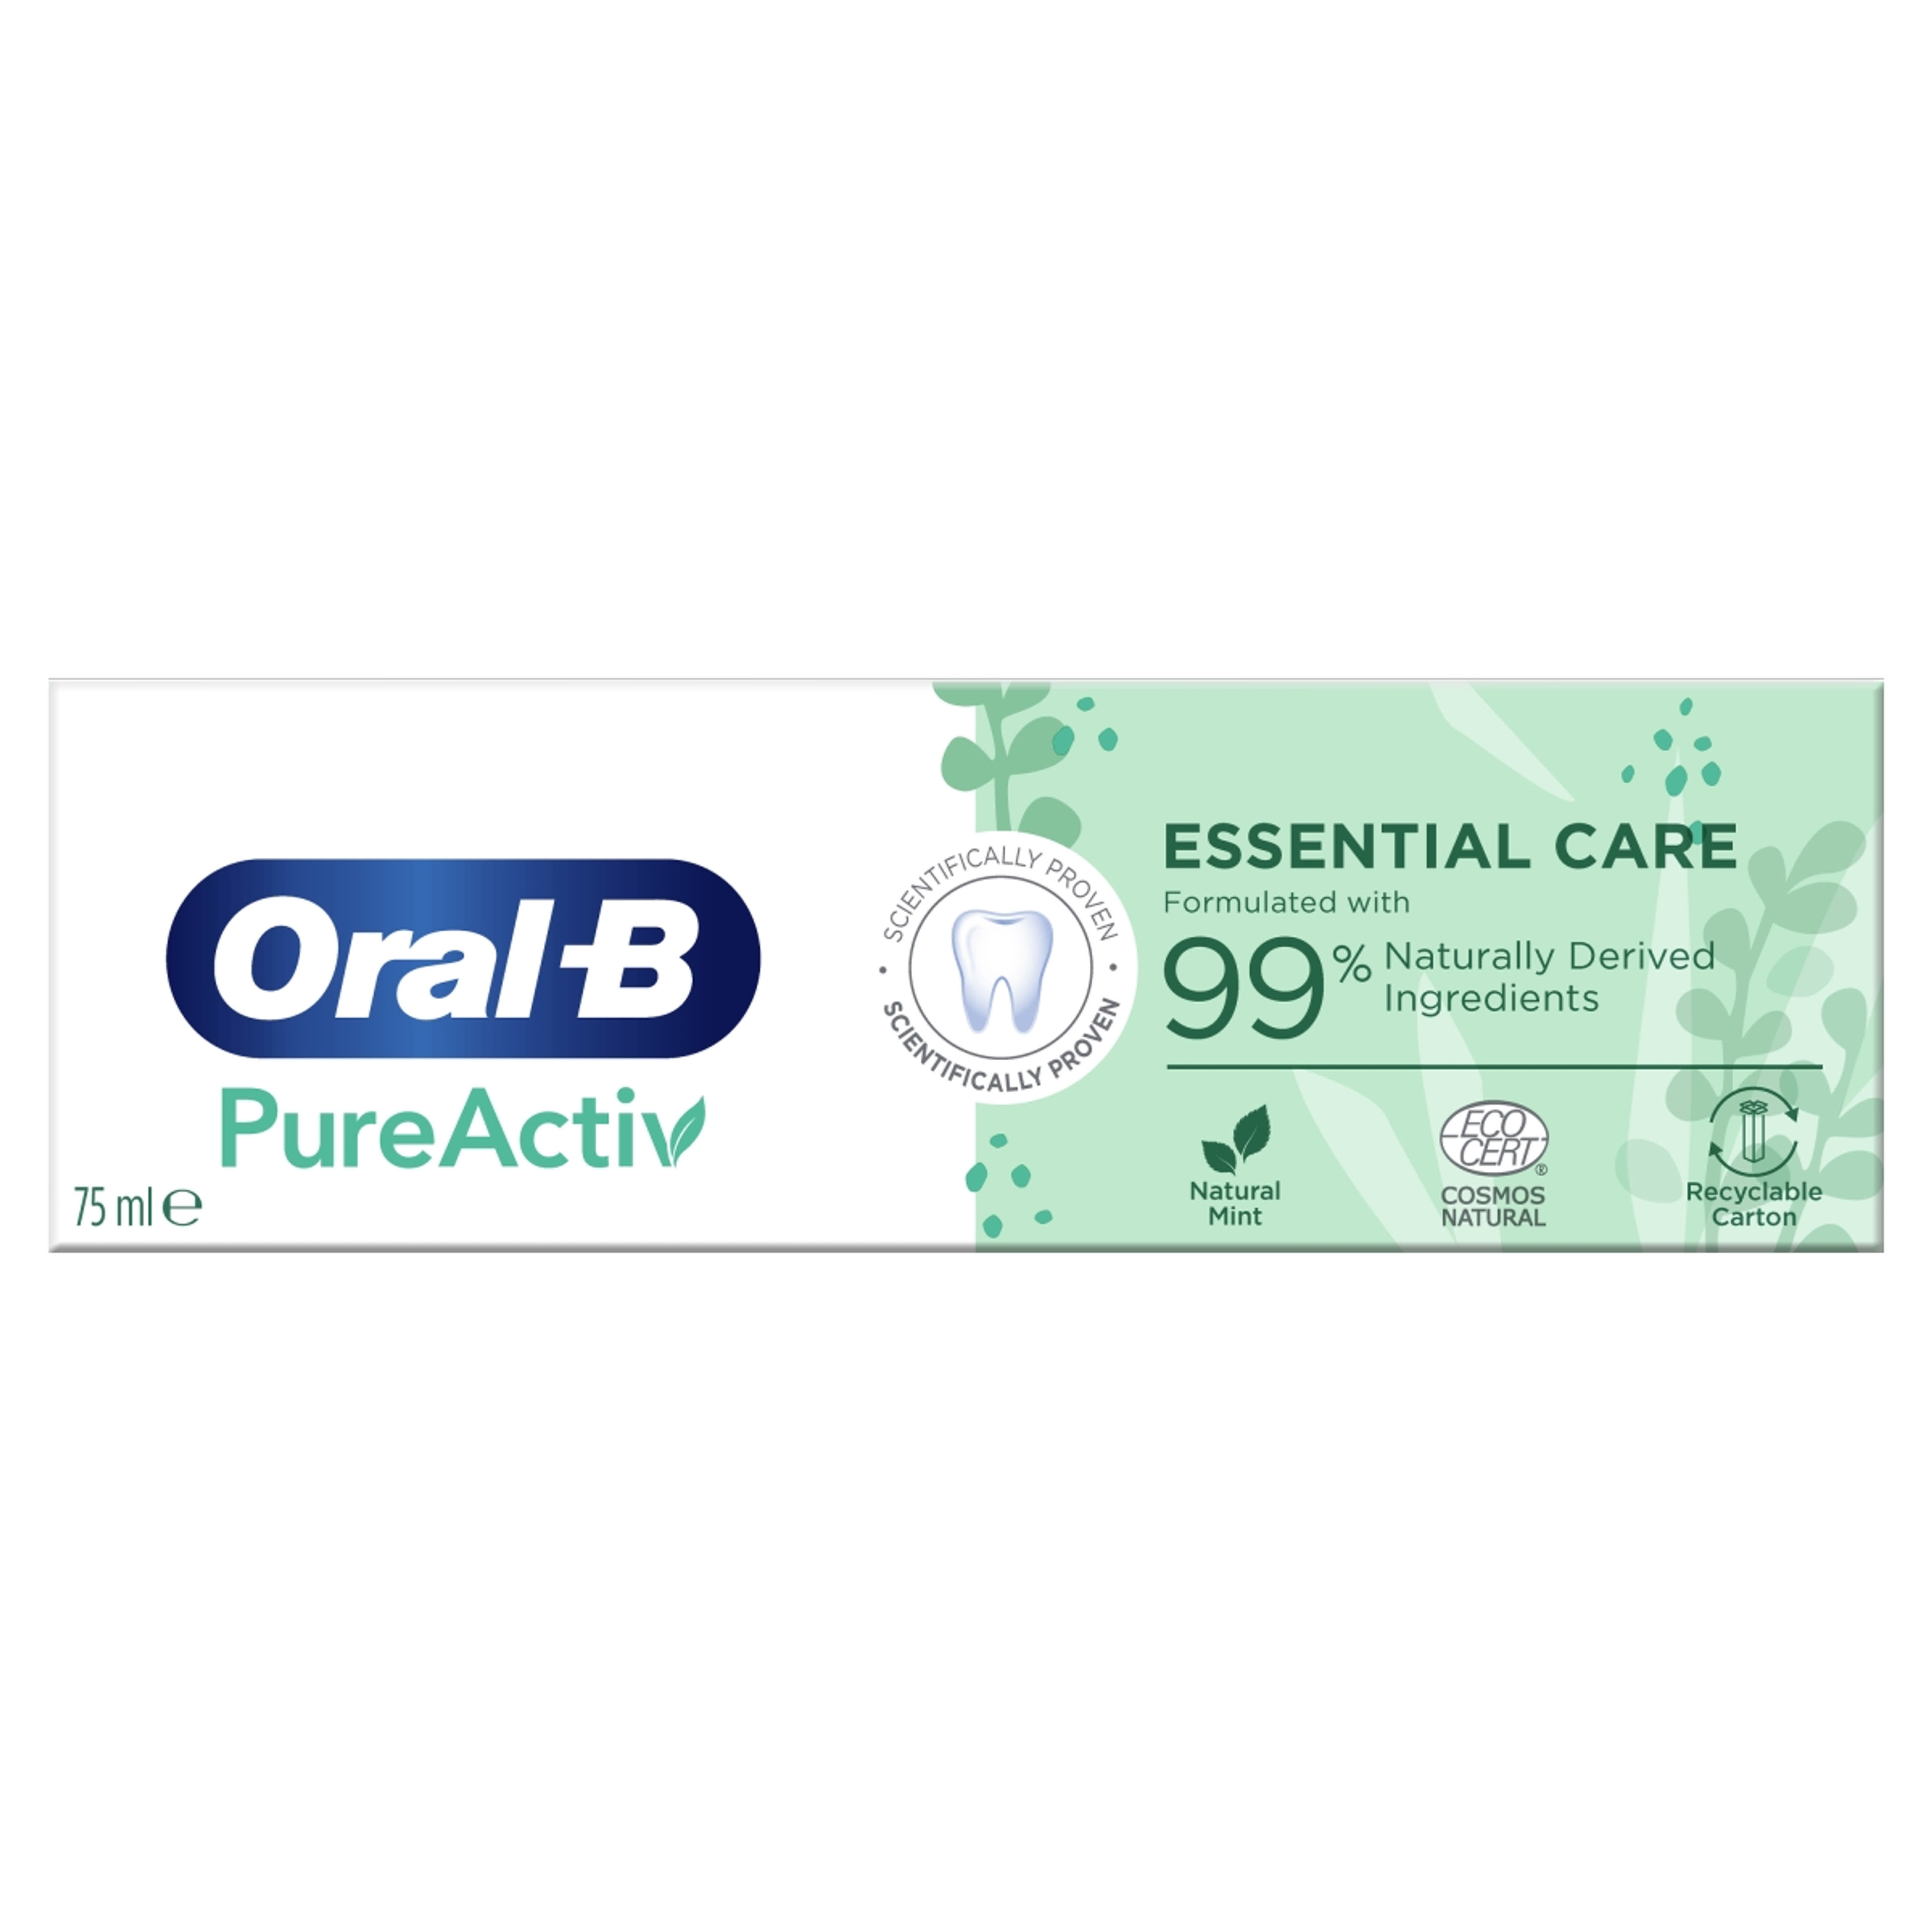 Oral-B Pure Activ Essential Care fogkrém - 75 ml